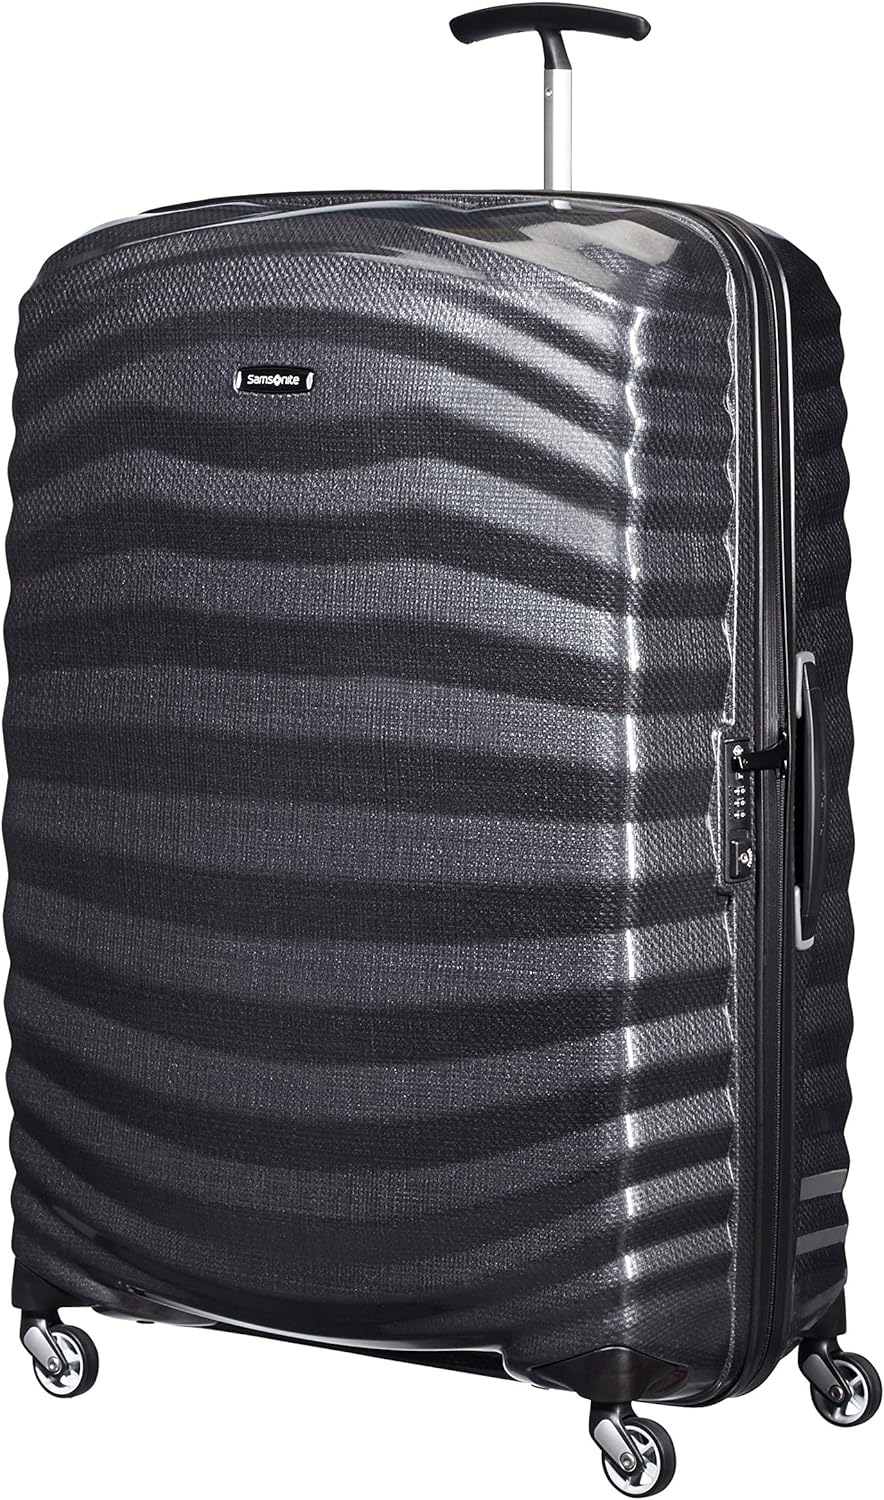 Samsonite Lite-Shock - Spinner XL Suitcase, 81 cm, 124 Litre, 4 Wheels, Black (Black)